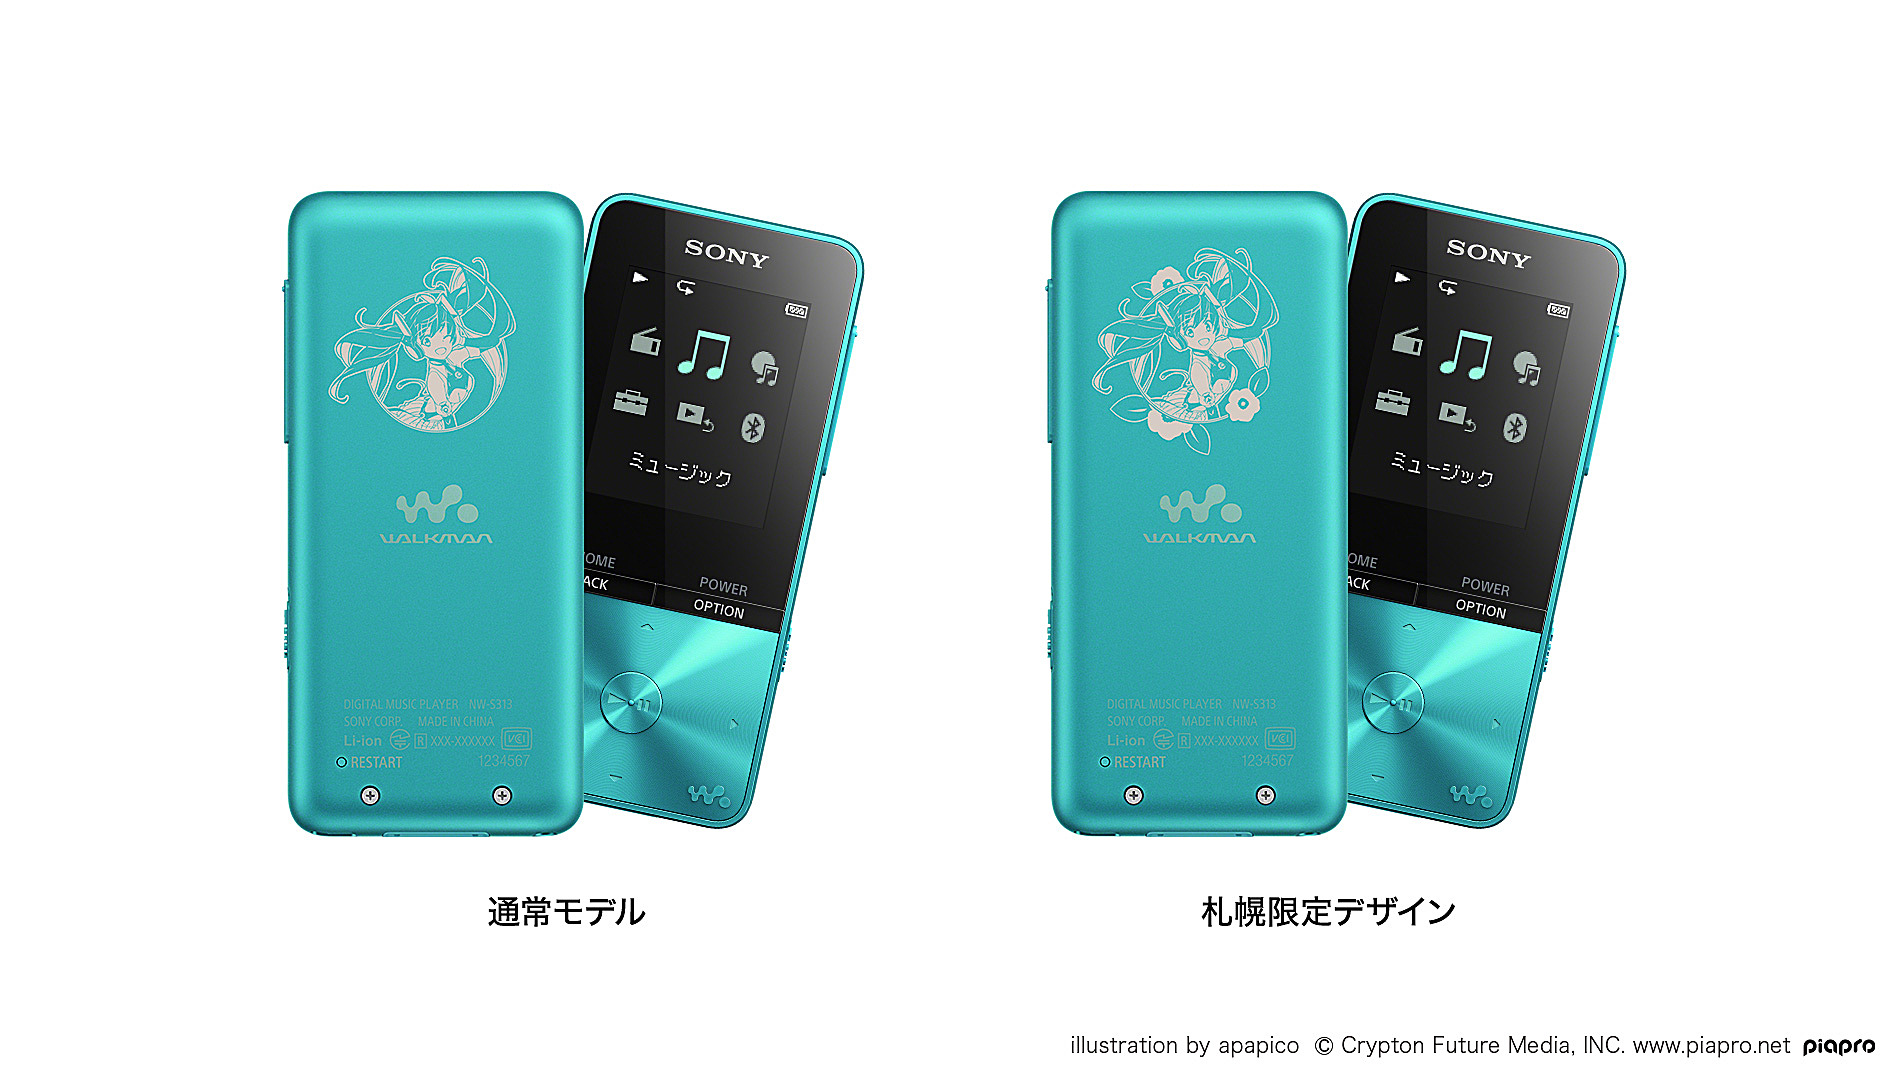 SONY Walkman S Hatsune Miku model 2019 NW-S310K/MK 4GB Animation Art